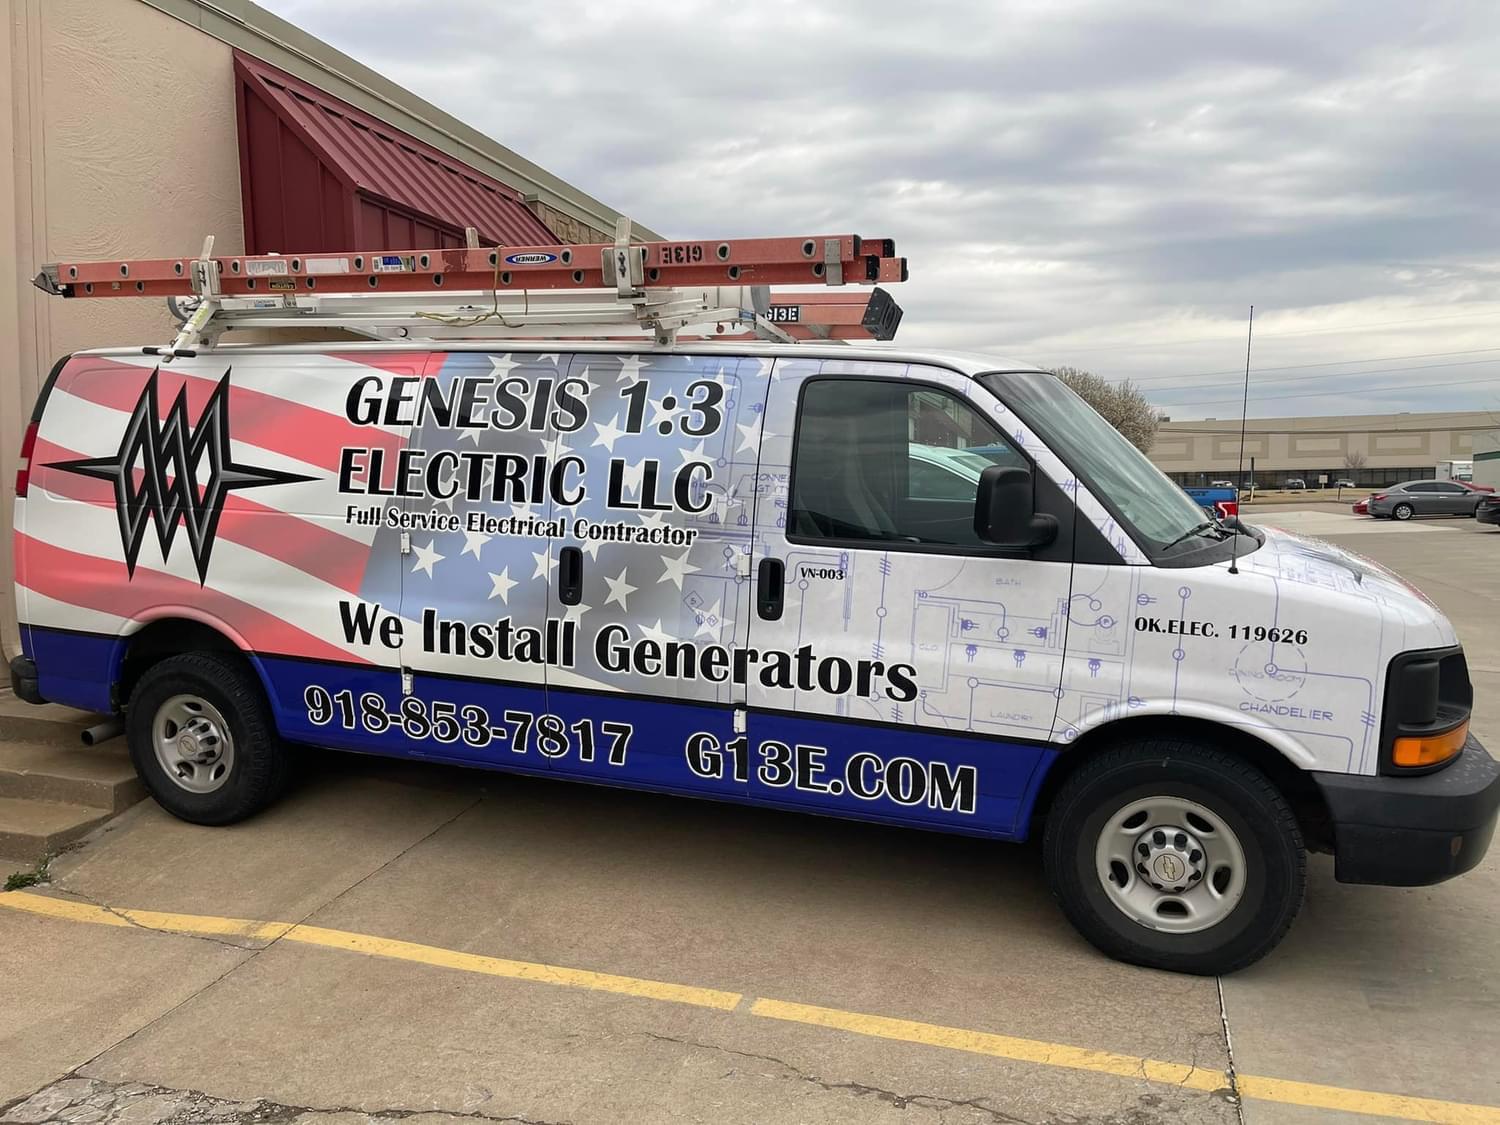 Genesis 1:3 Electric LLC